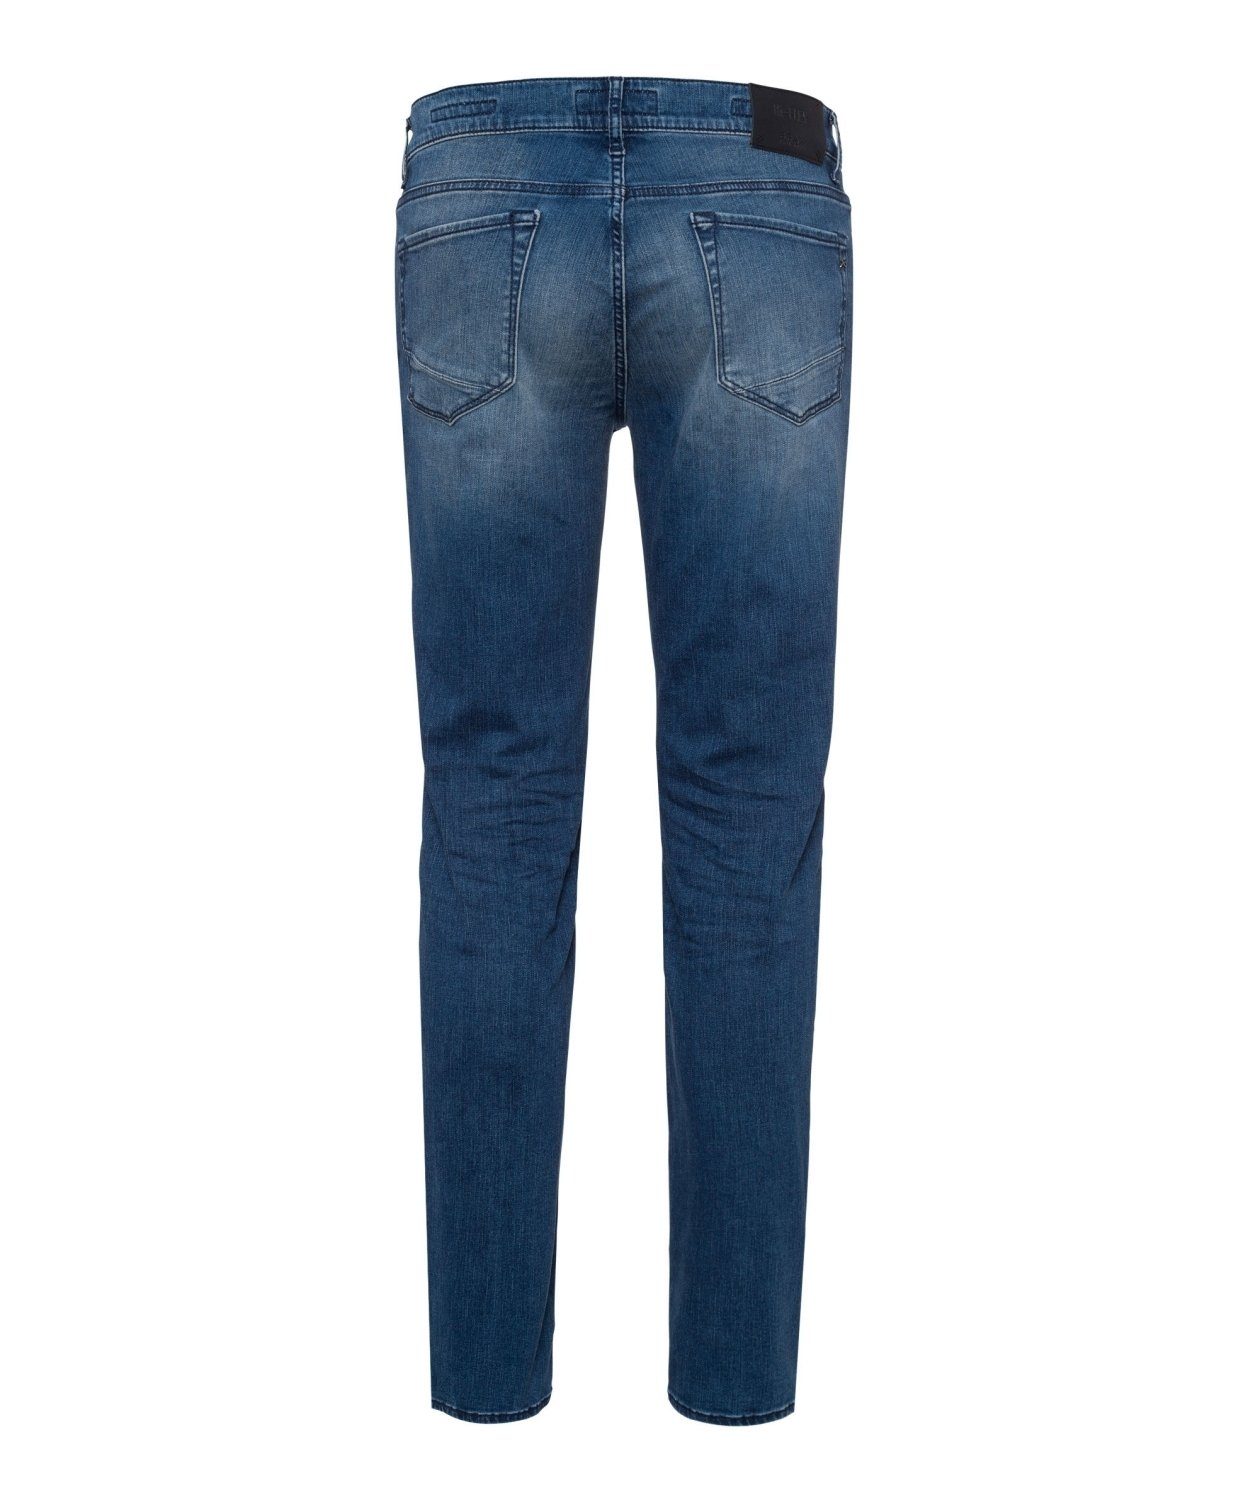 vintage 5-Pocket-Hose Brax Jeans Herren Slim Chuck Style used Fit blue